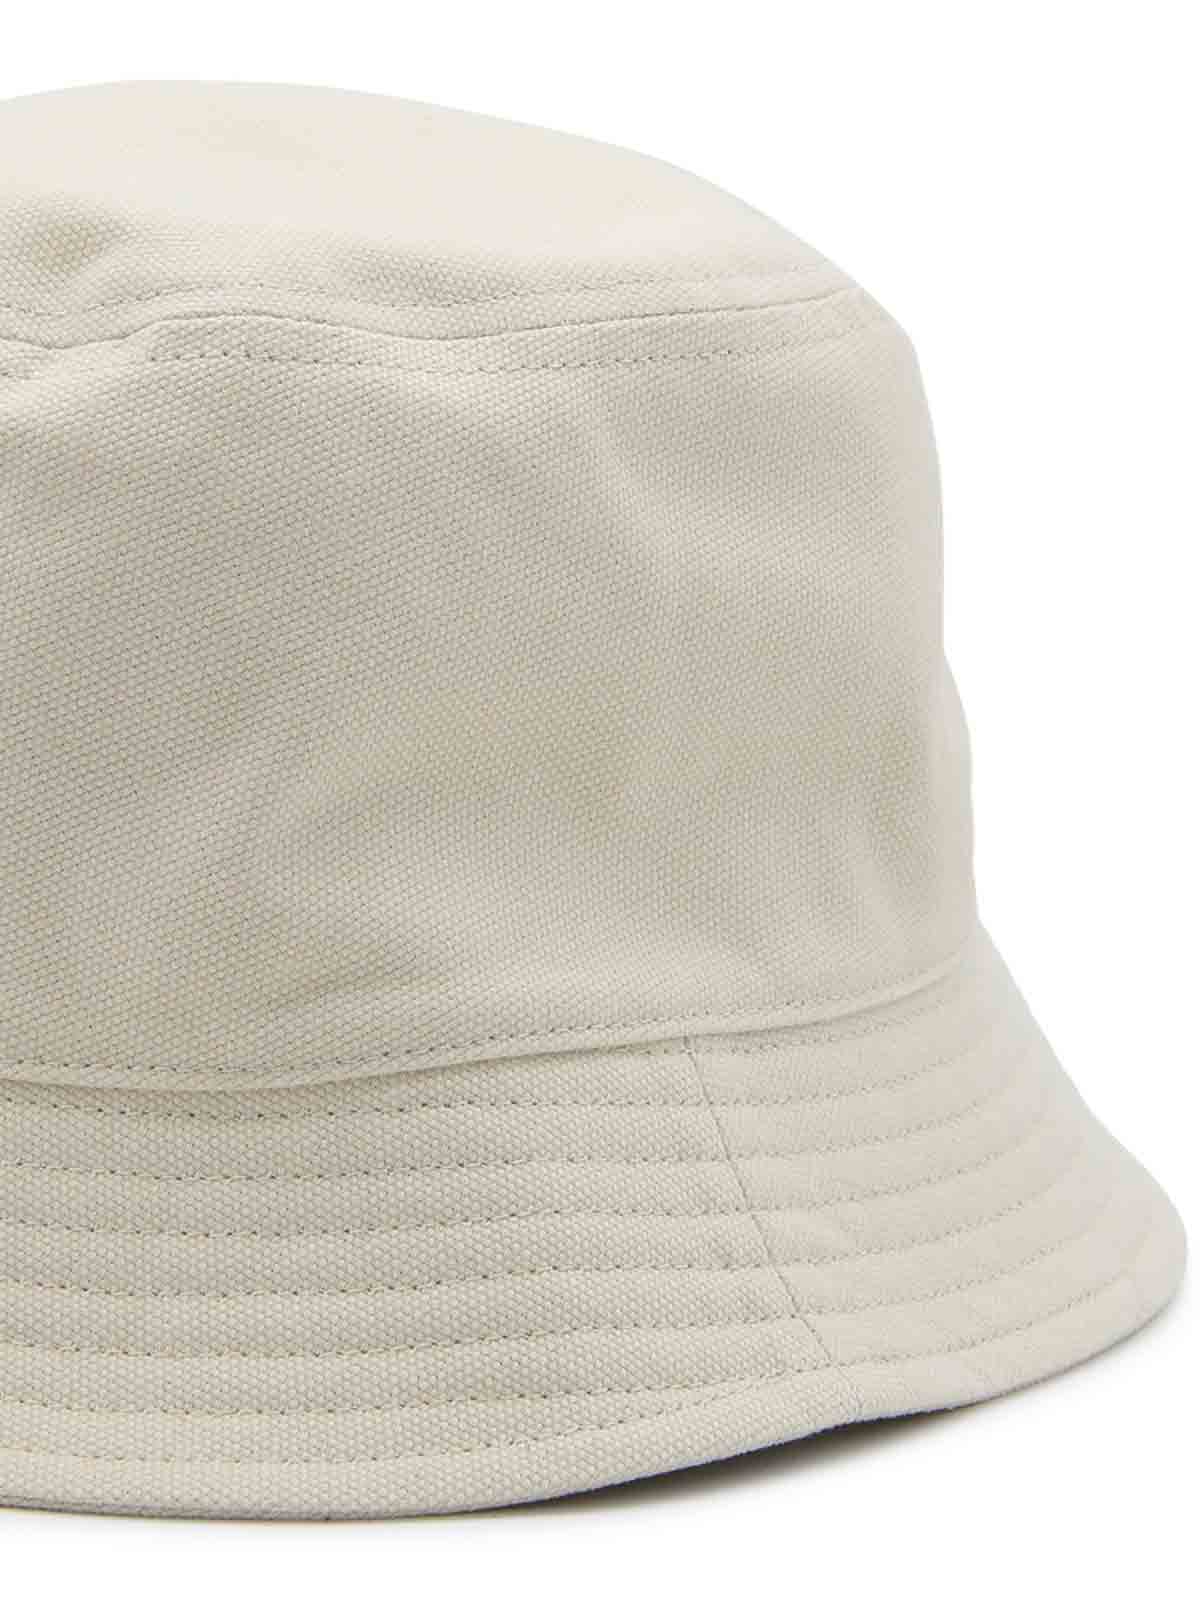 Shop Isabel Marant Cream And Black Cotton Haley Bucket Hat